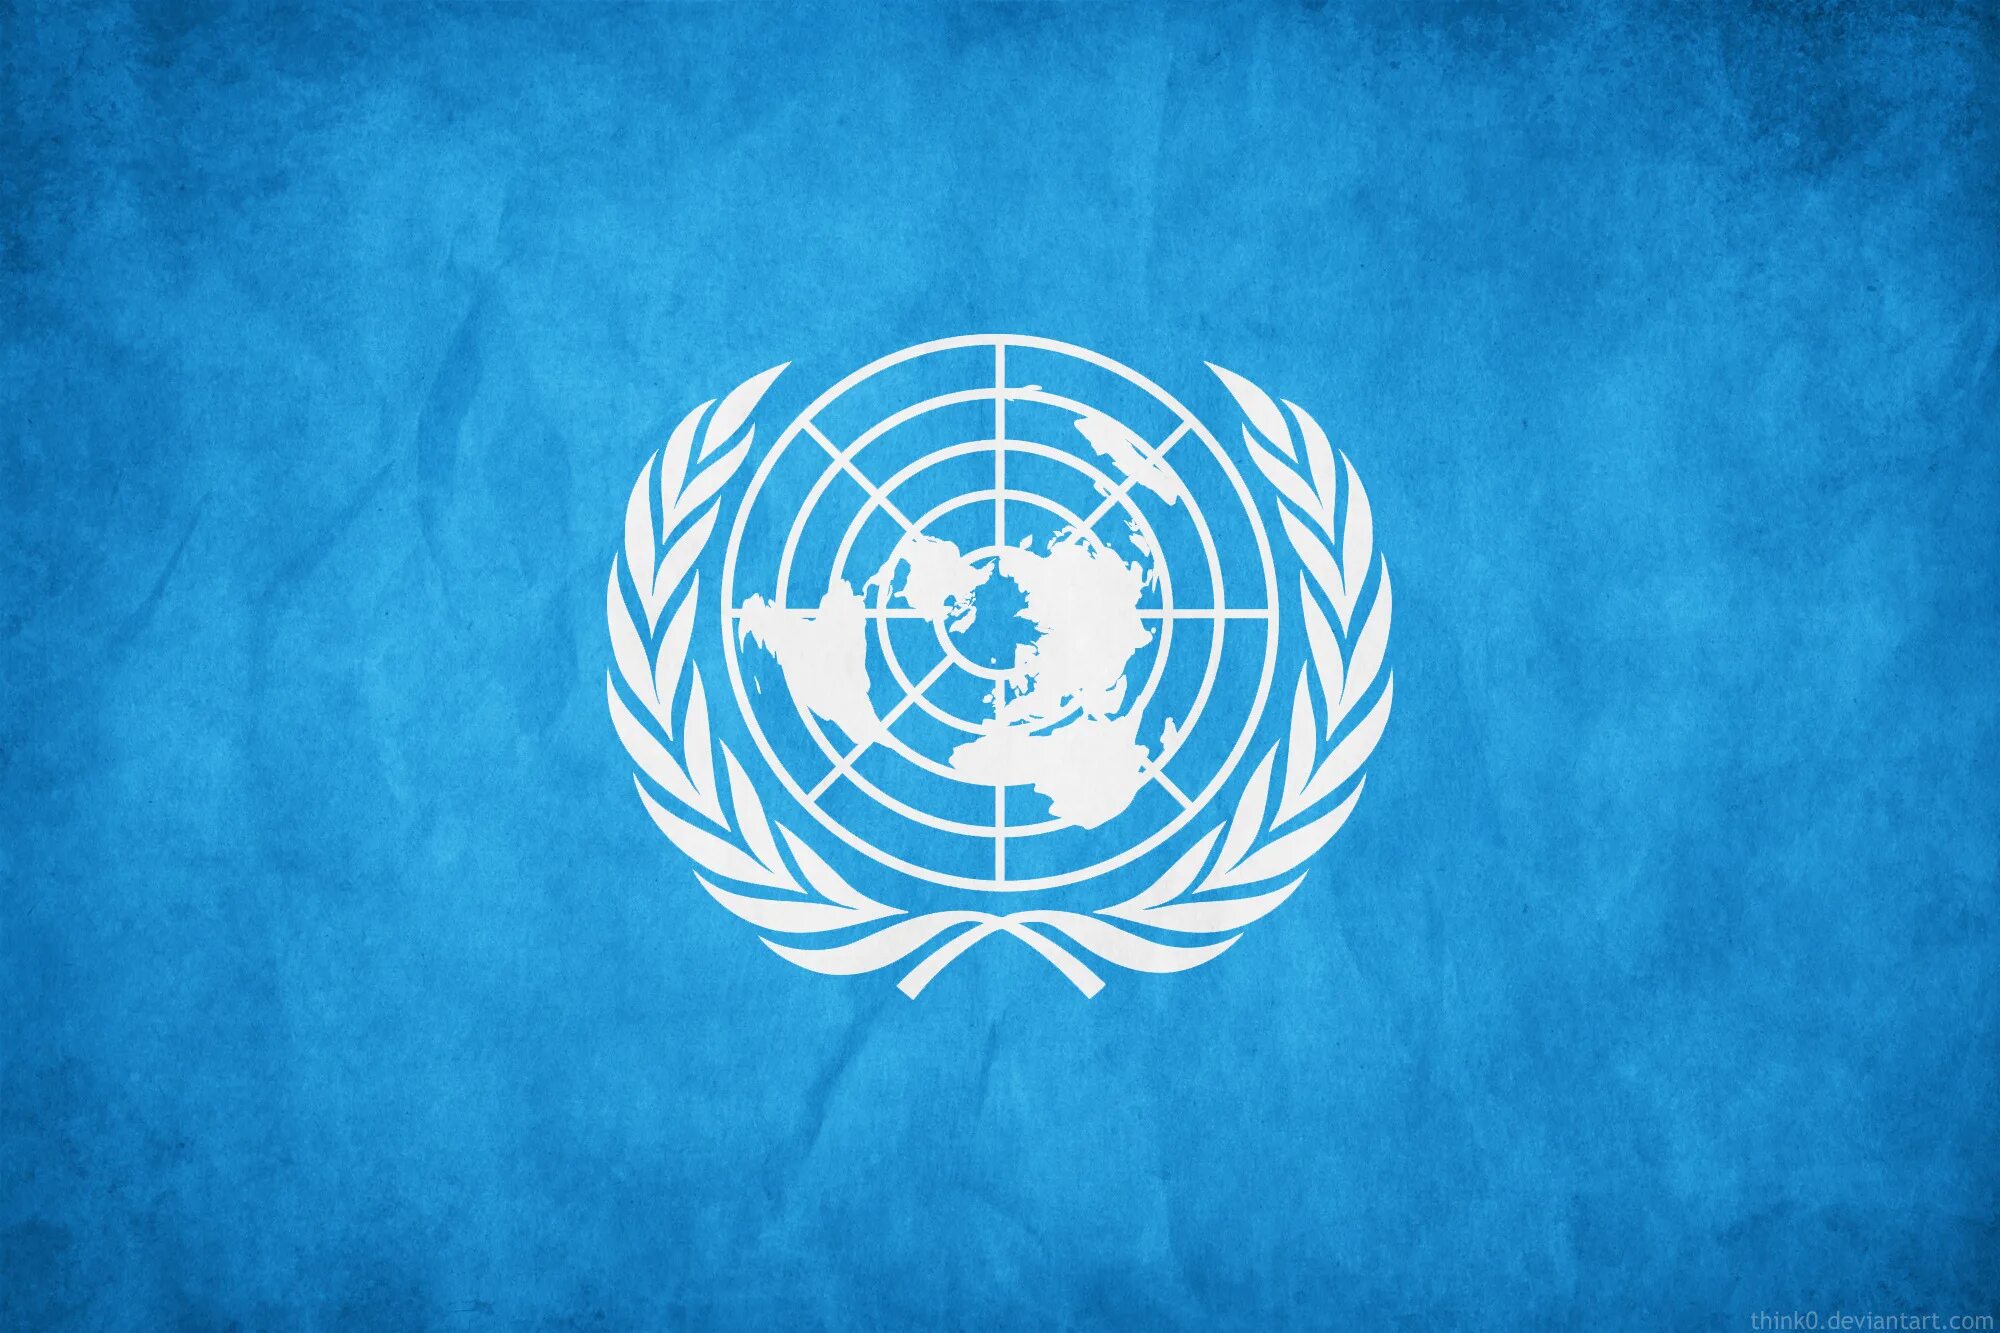 Е оон. Флаг миротворческих сил ООН. Организация Объединенных наций (ООН). Флаг организации Объединенных наций. Организация Объединенных наций ООН флаг.